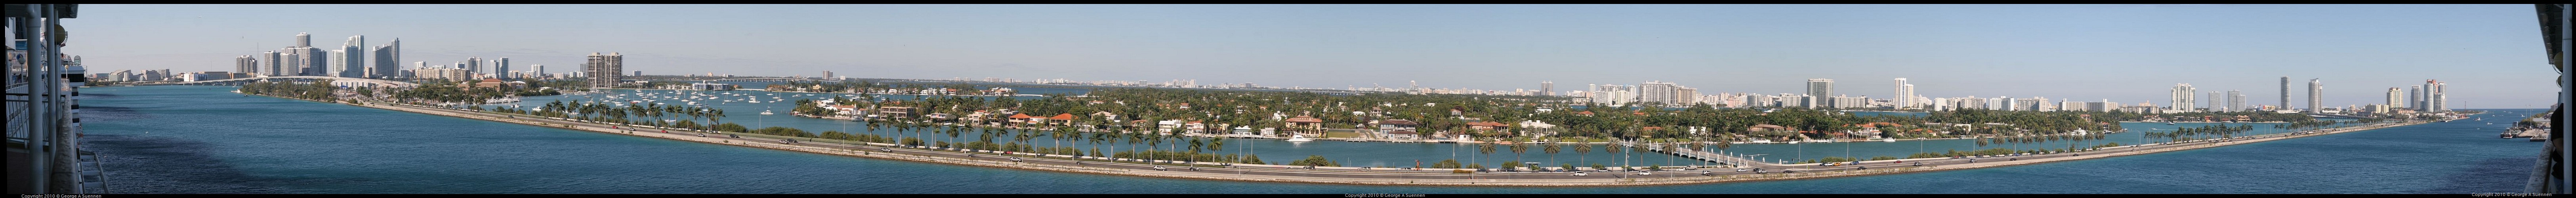 pano-PortofMiami-1.jpg - Port of Miami